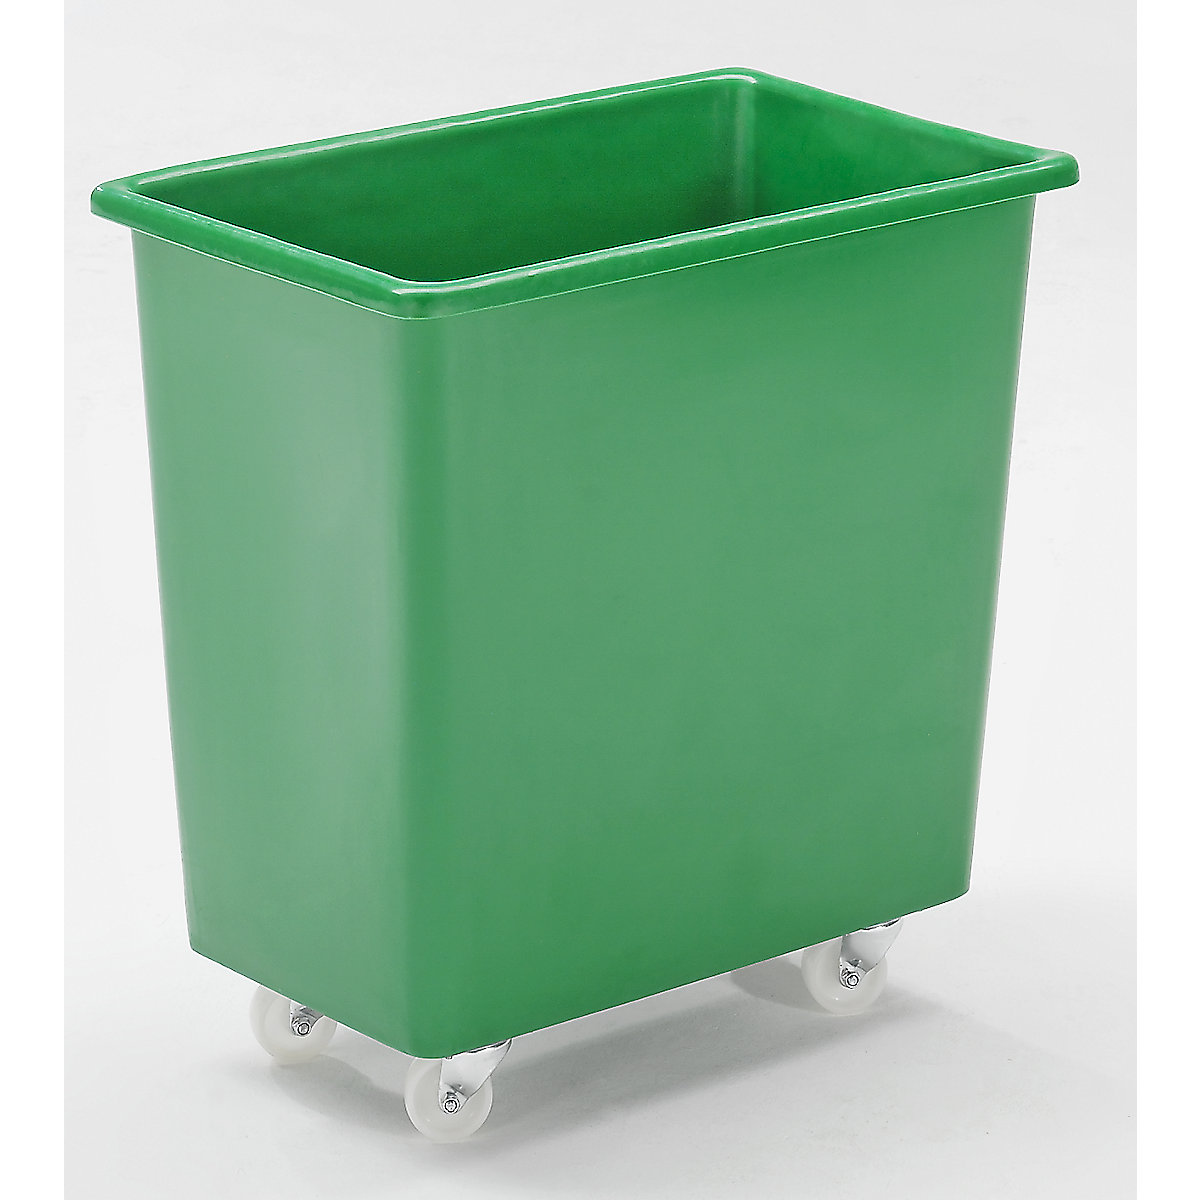 Rechteckbehälter aus Polyethylen, fahrbar, Inhalt 135 l, grün, ab 5 Stk